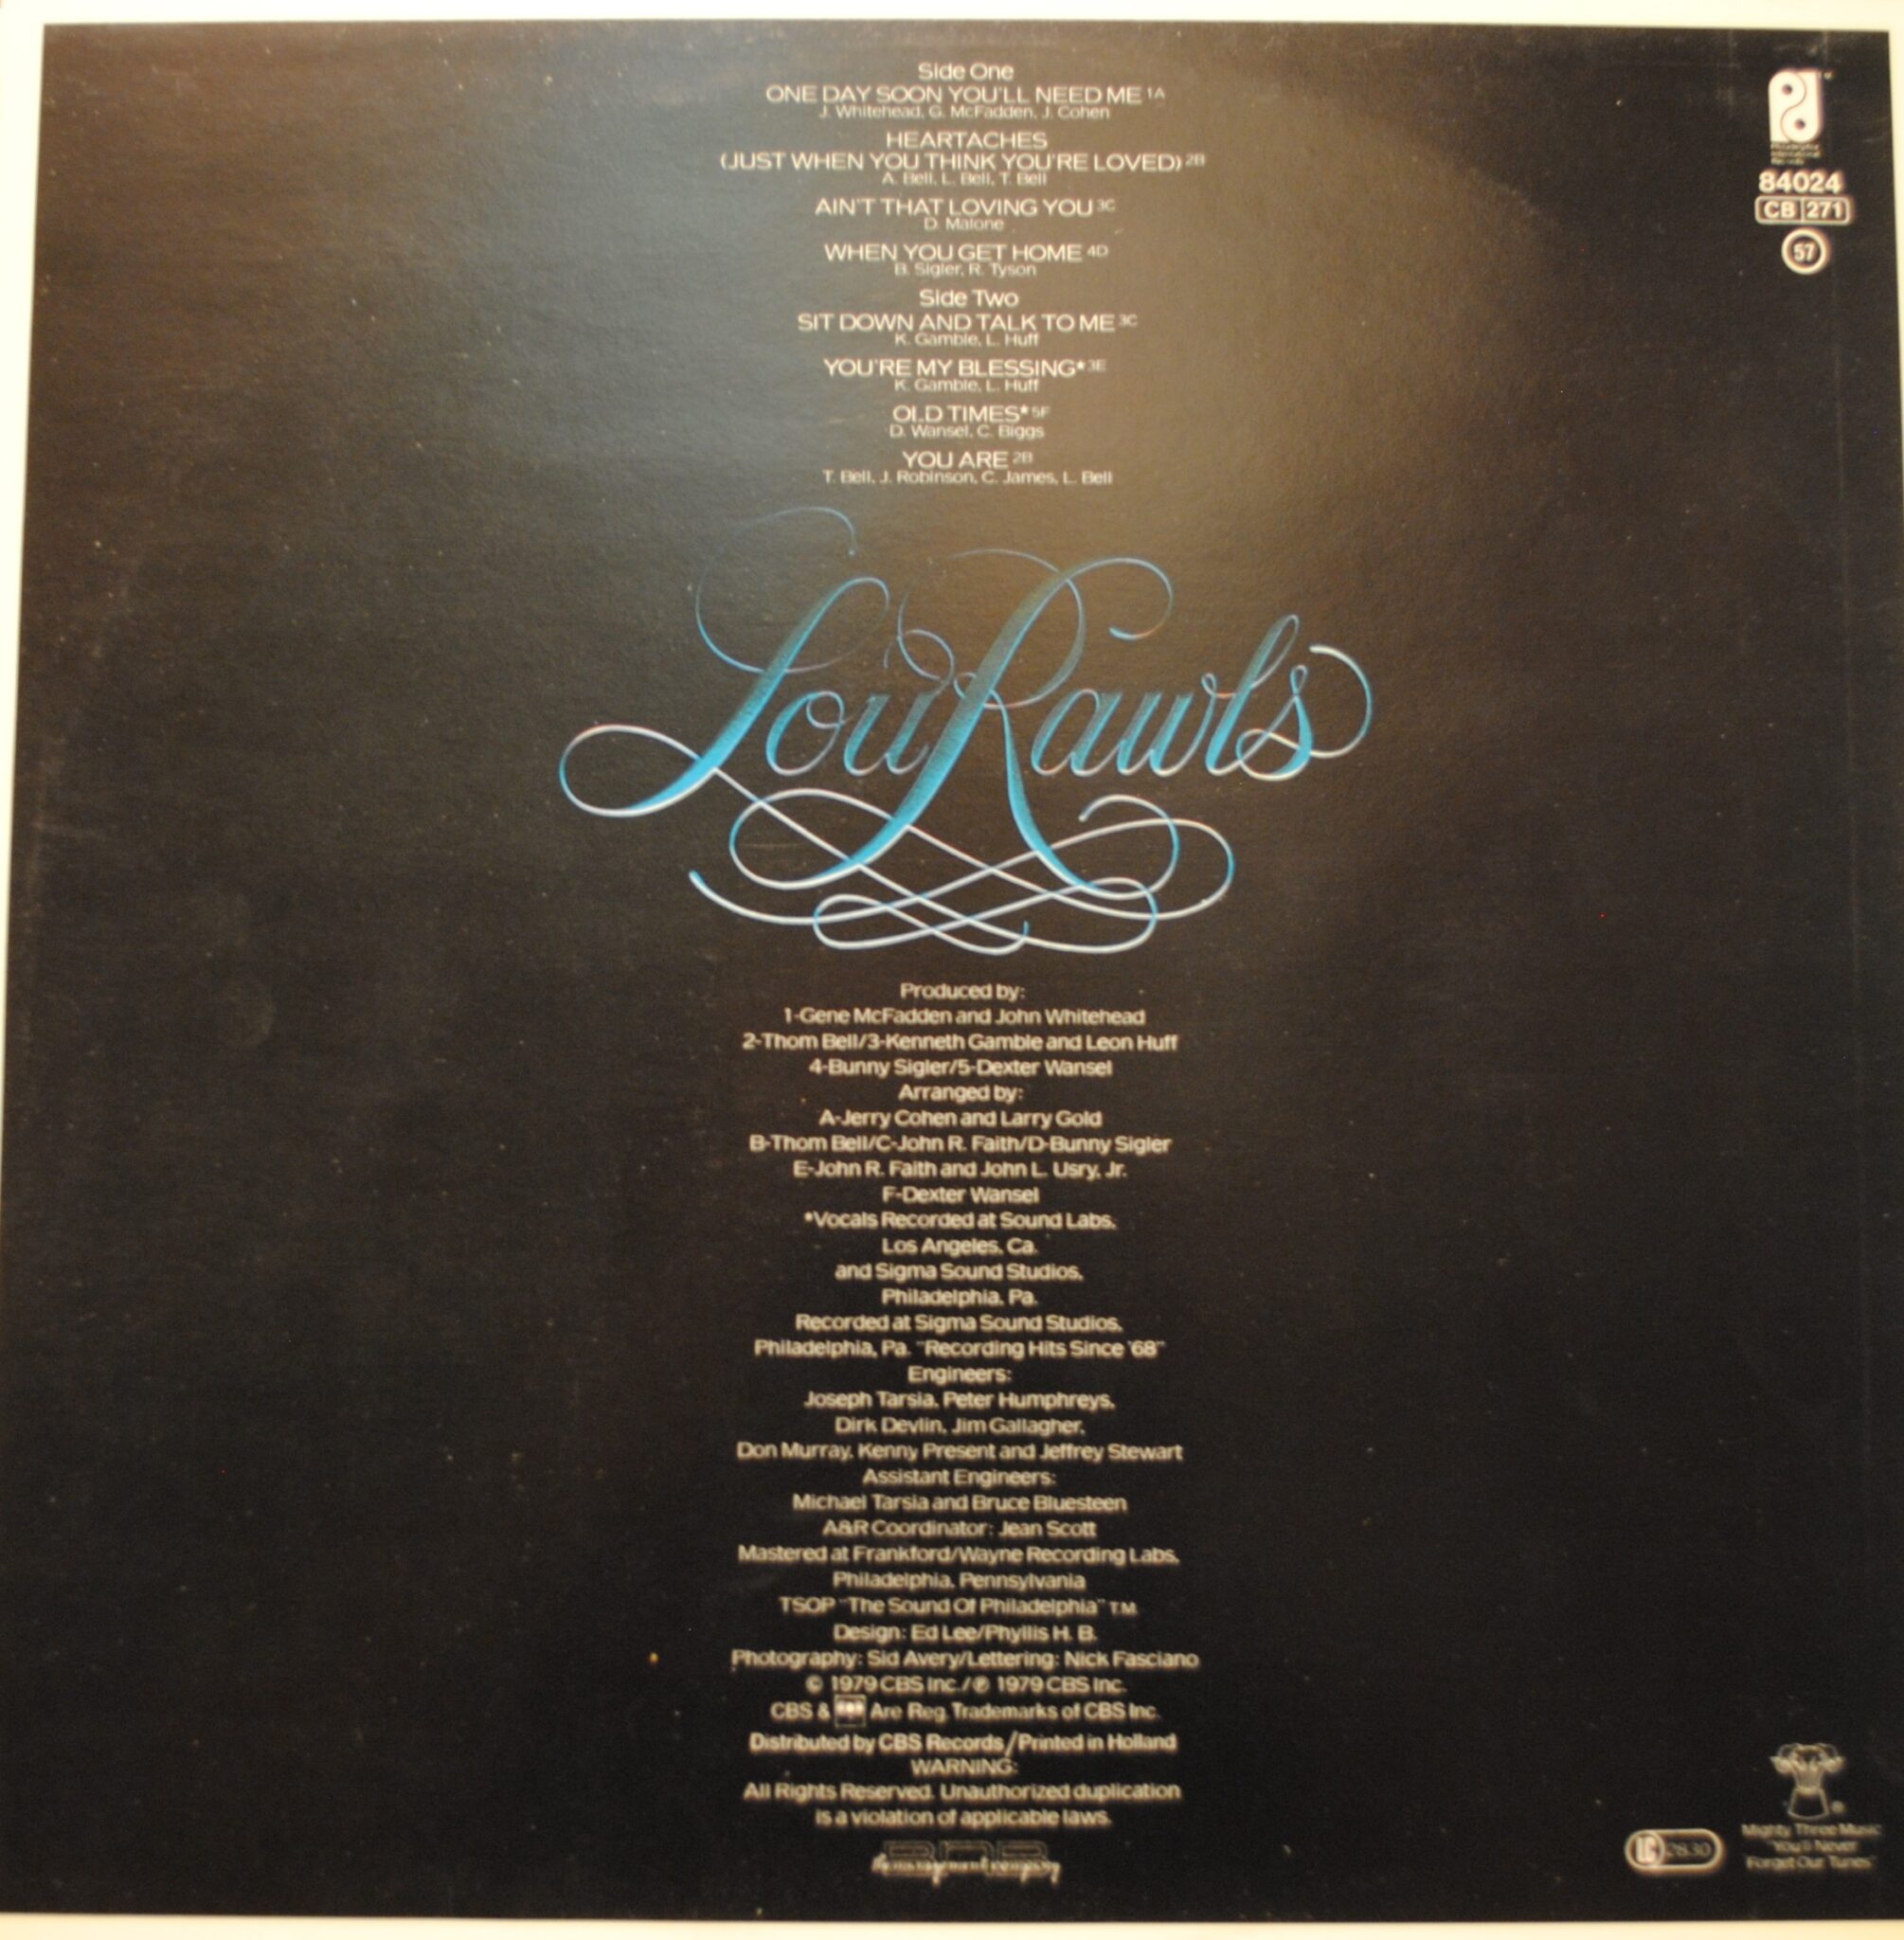 LOU RAWLS - Sit Down & Talk To Me / Let Me Be Good To You - 2 CD - Original  724352123926